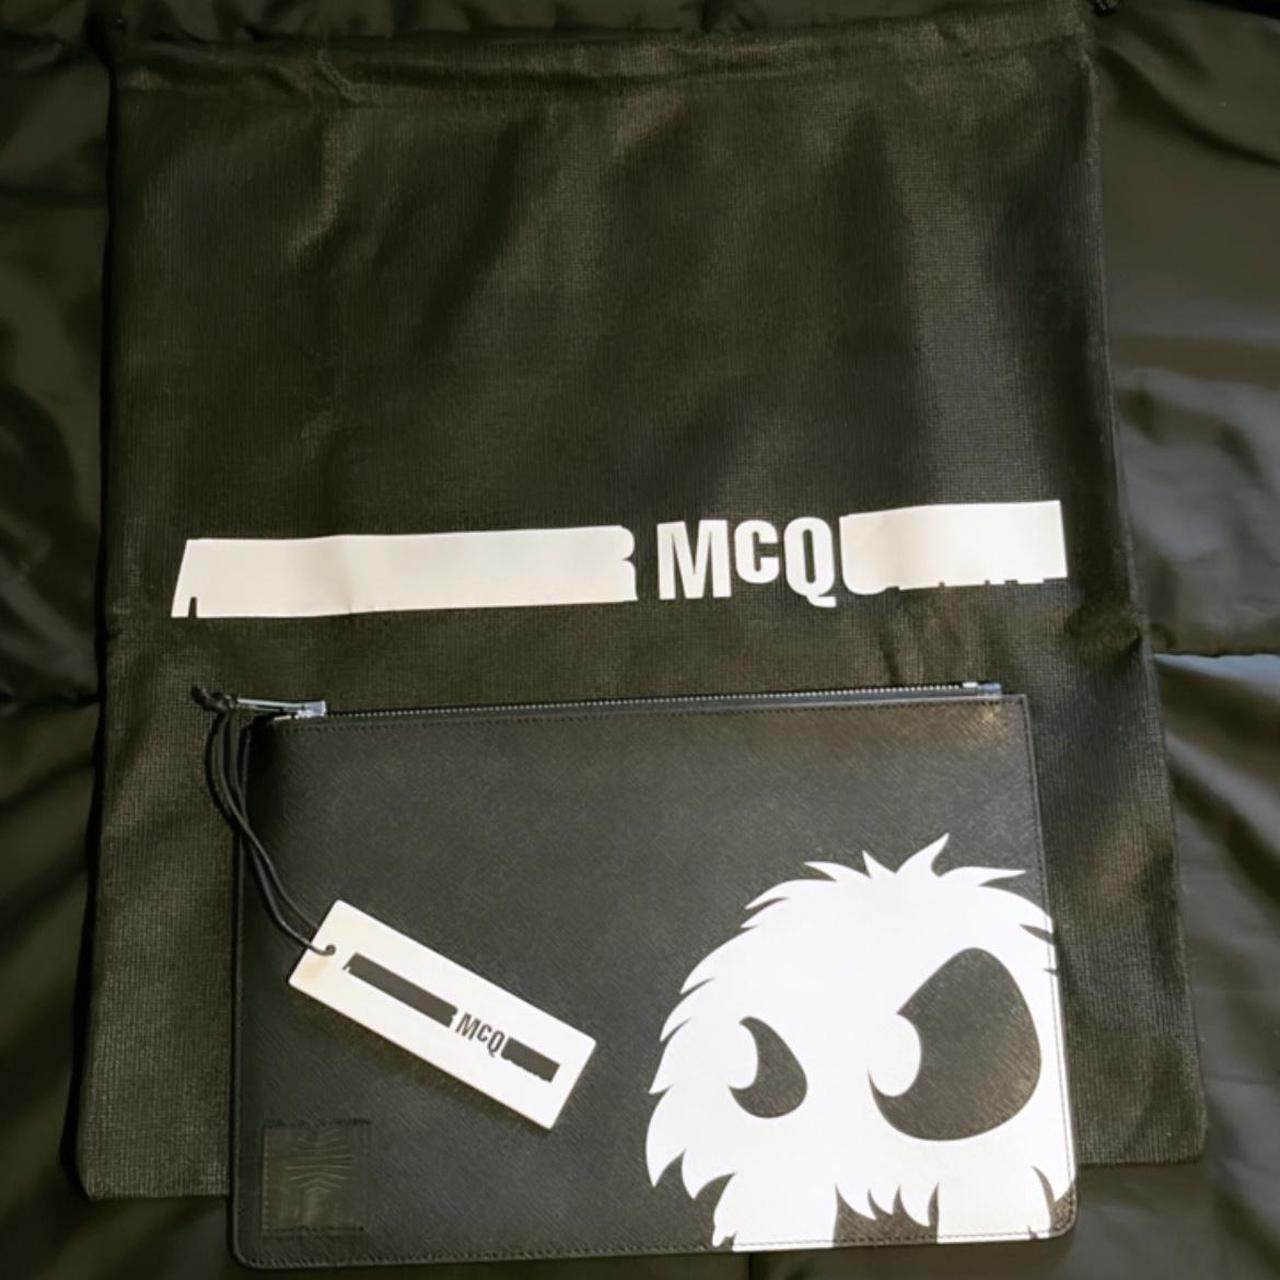 McQ Alexander McQueen Men's Black and White Bag (3)